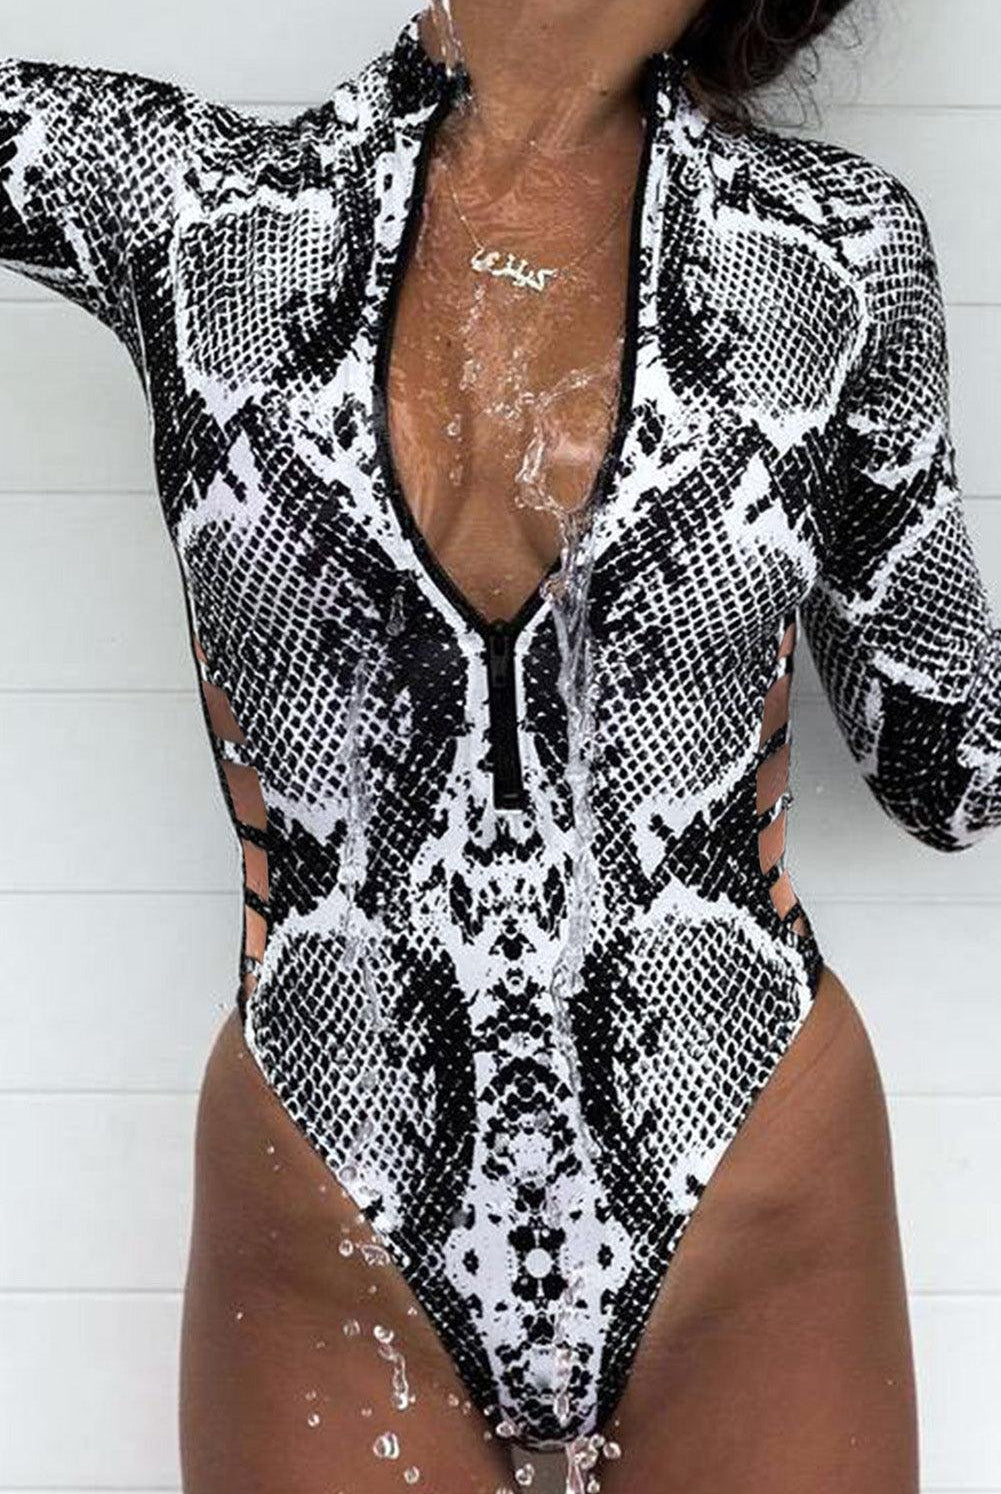 Women's Swimwear - 1PC Animal Print Zipper Cut-Out Wetsuit